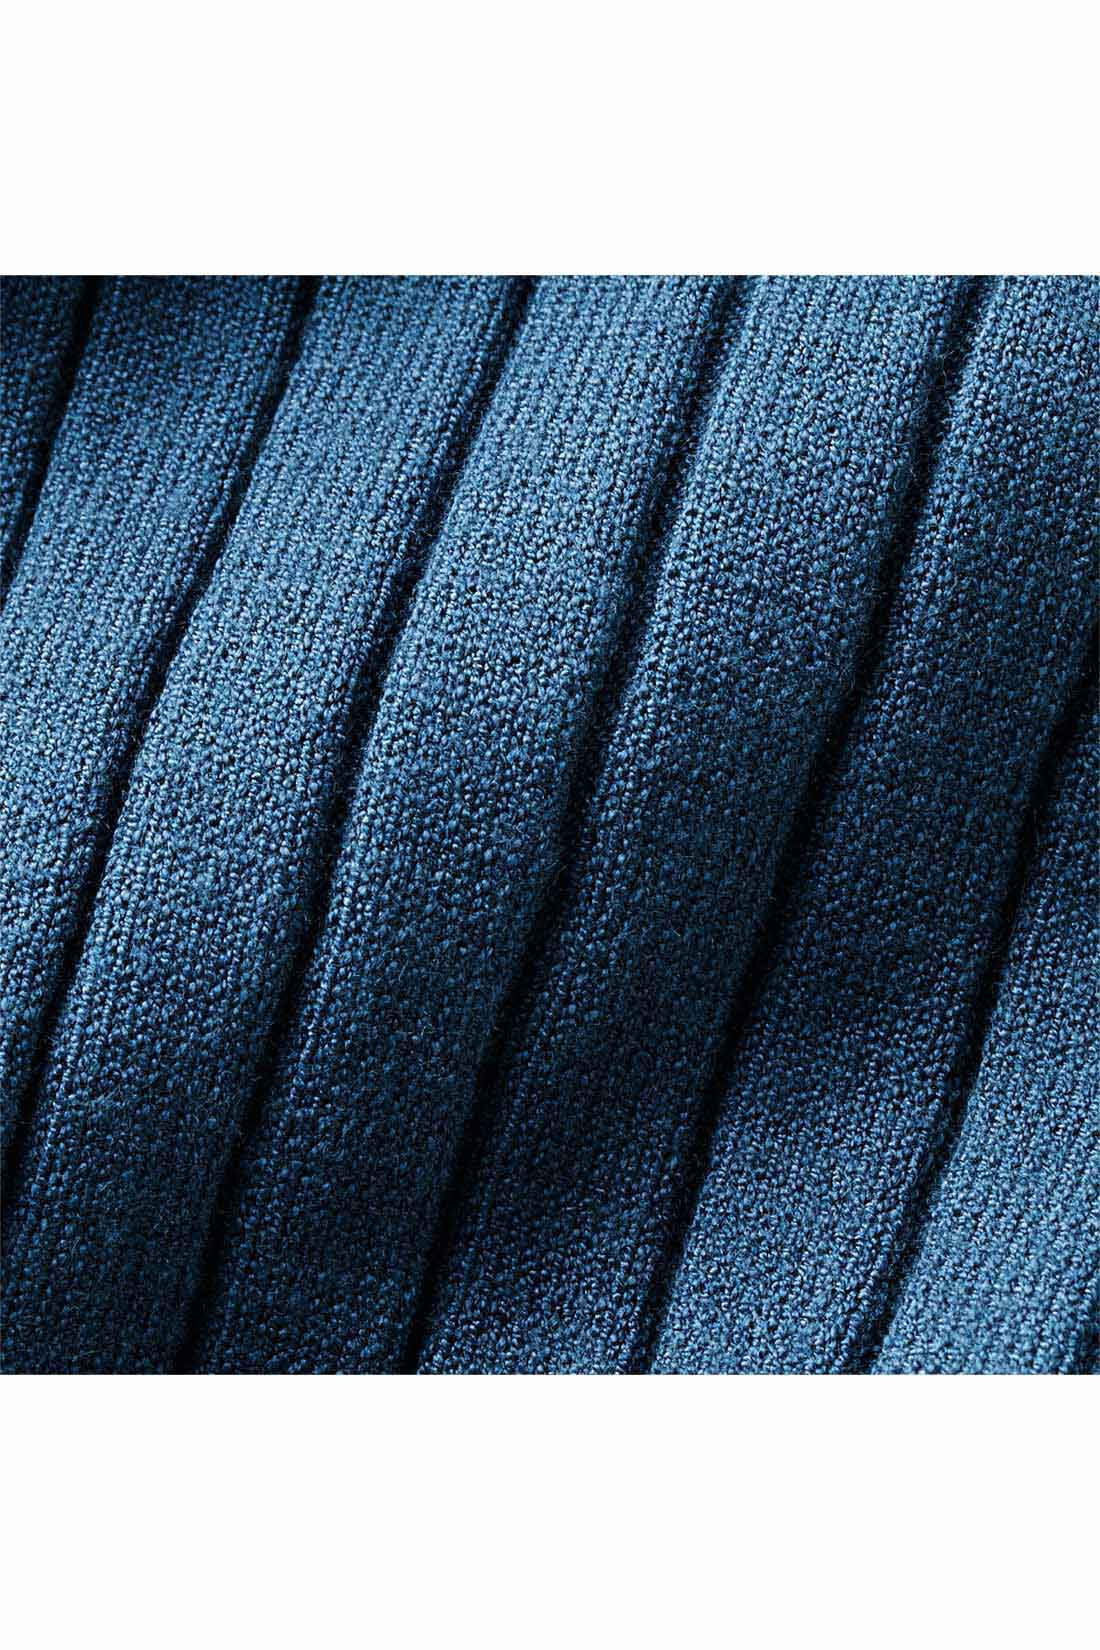 Real Stock|IEDIT[イディット]　キーネックデザインのワイドリブニットトップス〈ブルー〉|滑らかな肌ざわりのレーヨン混素材のワイドリブニット。